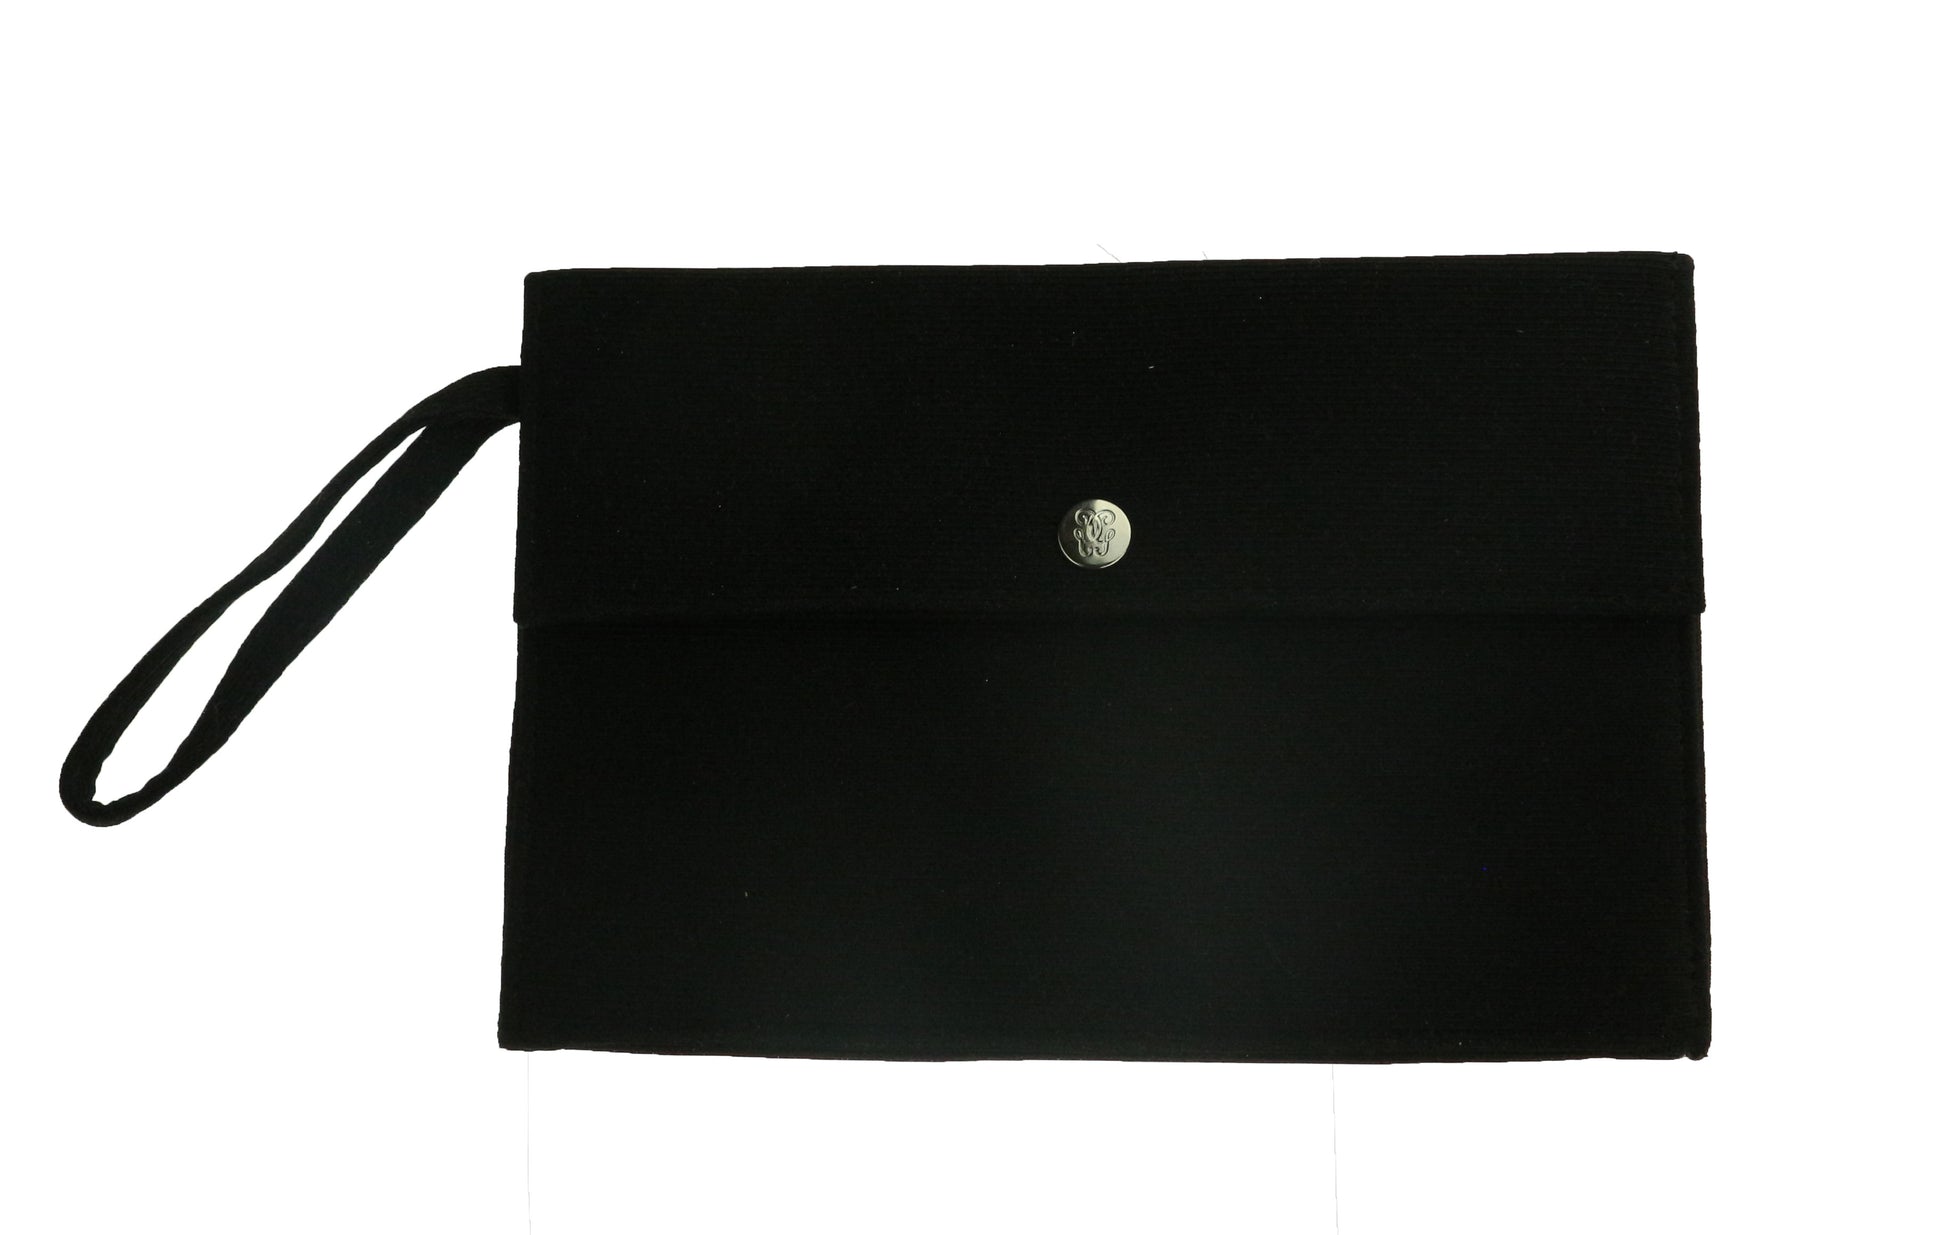 Geurlain 'Black Shimmer' Cosmetic Bag New Cosmetic Bag